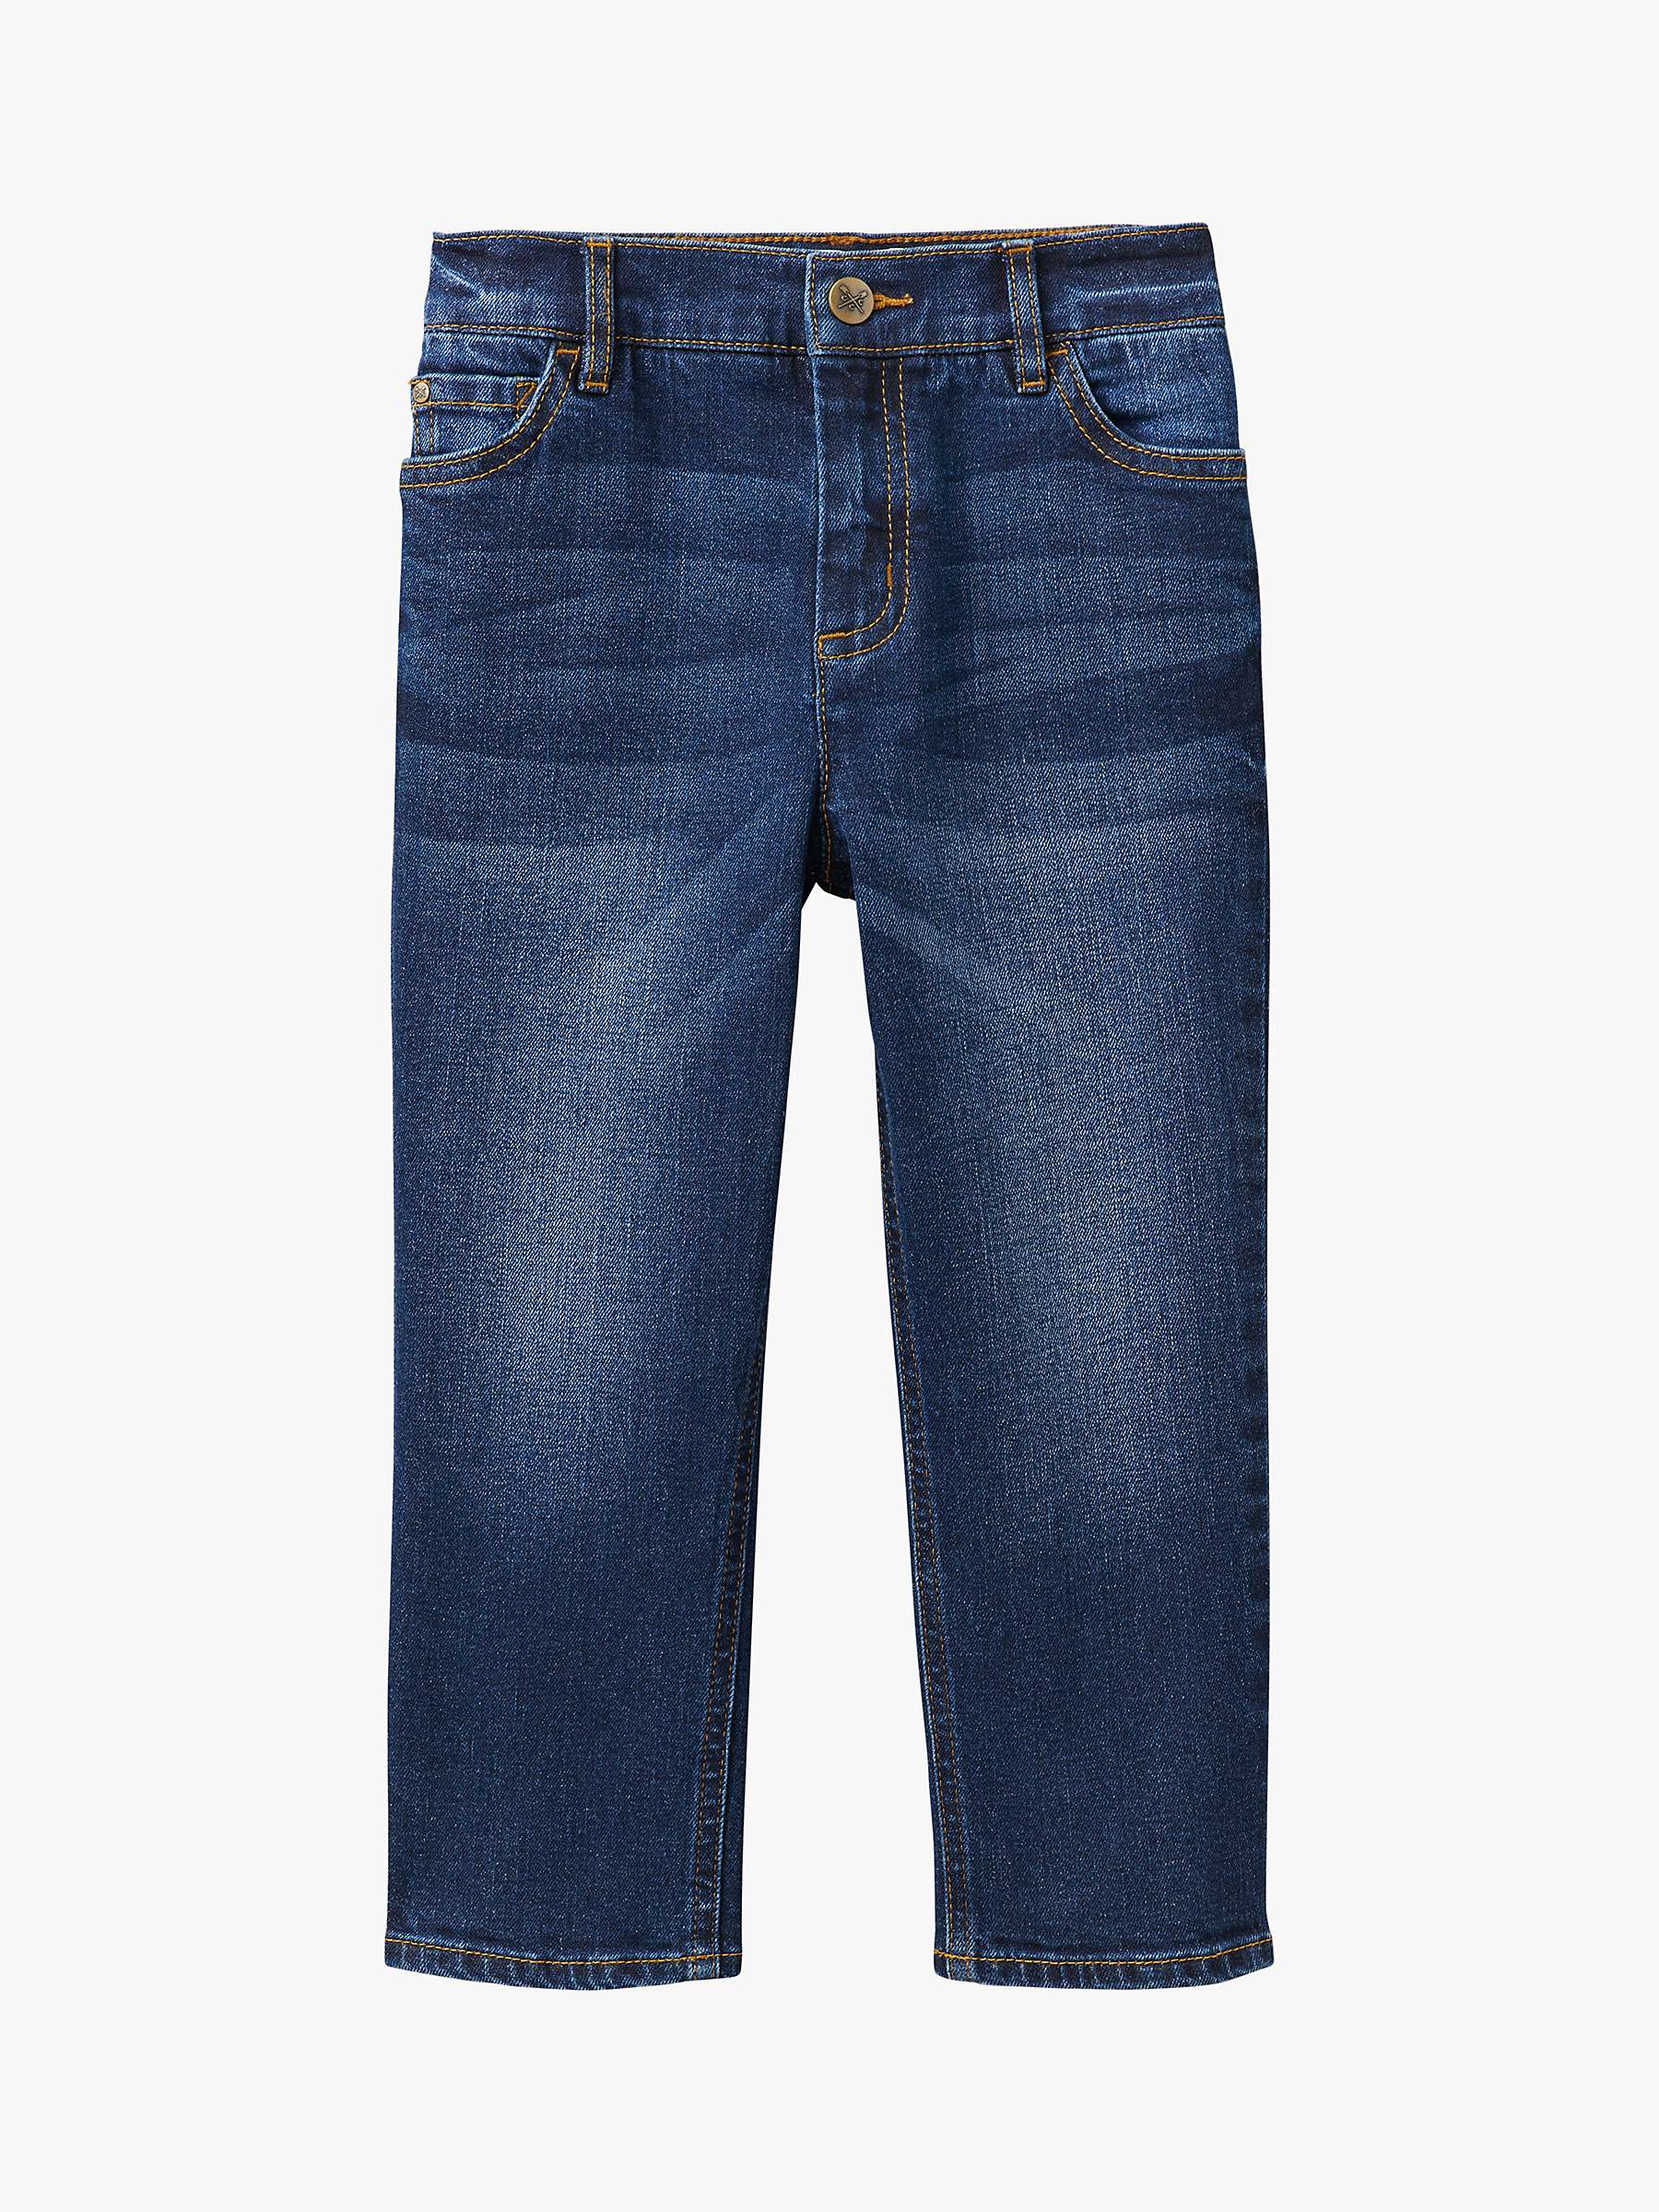 Buy Crew Clothing Boys' Slim Fit Jeans, Indigo Online at johnlewis.com